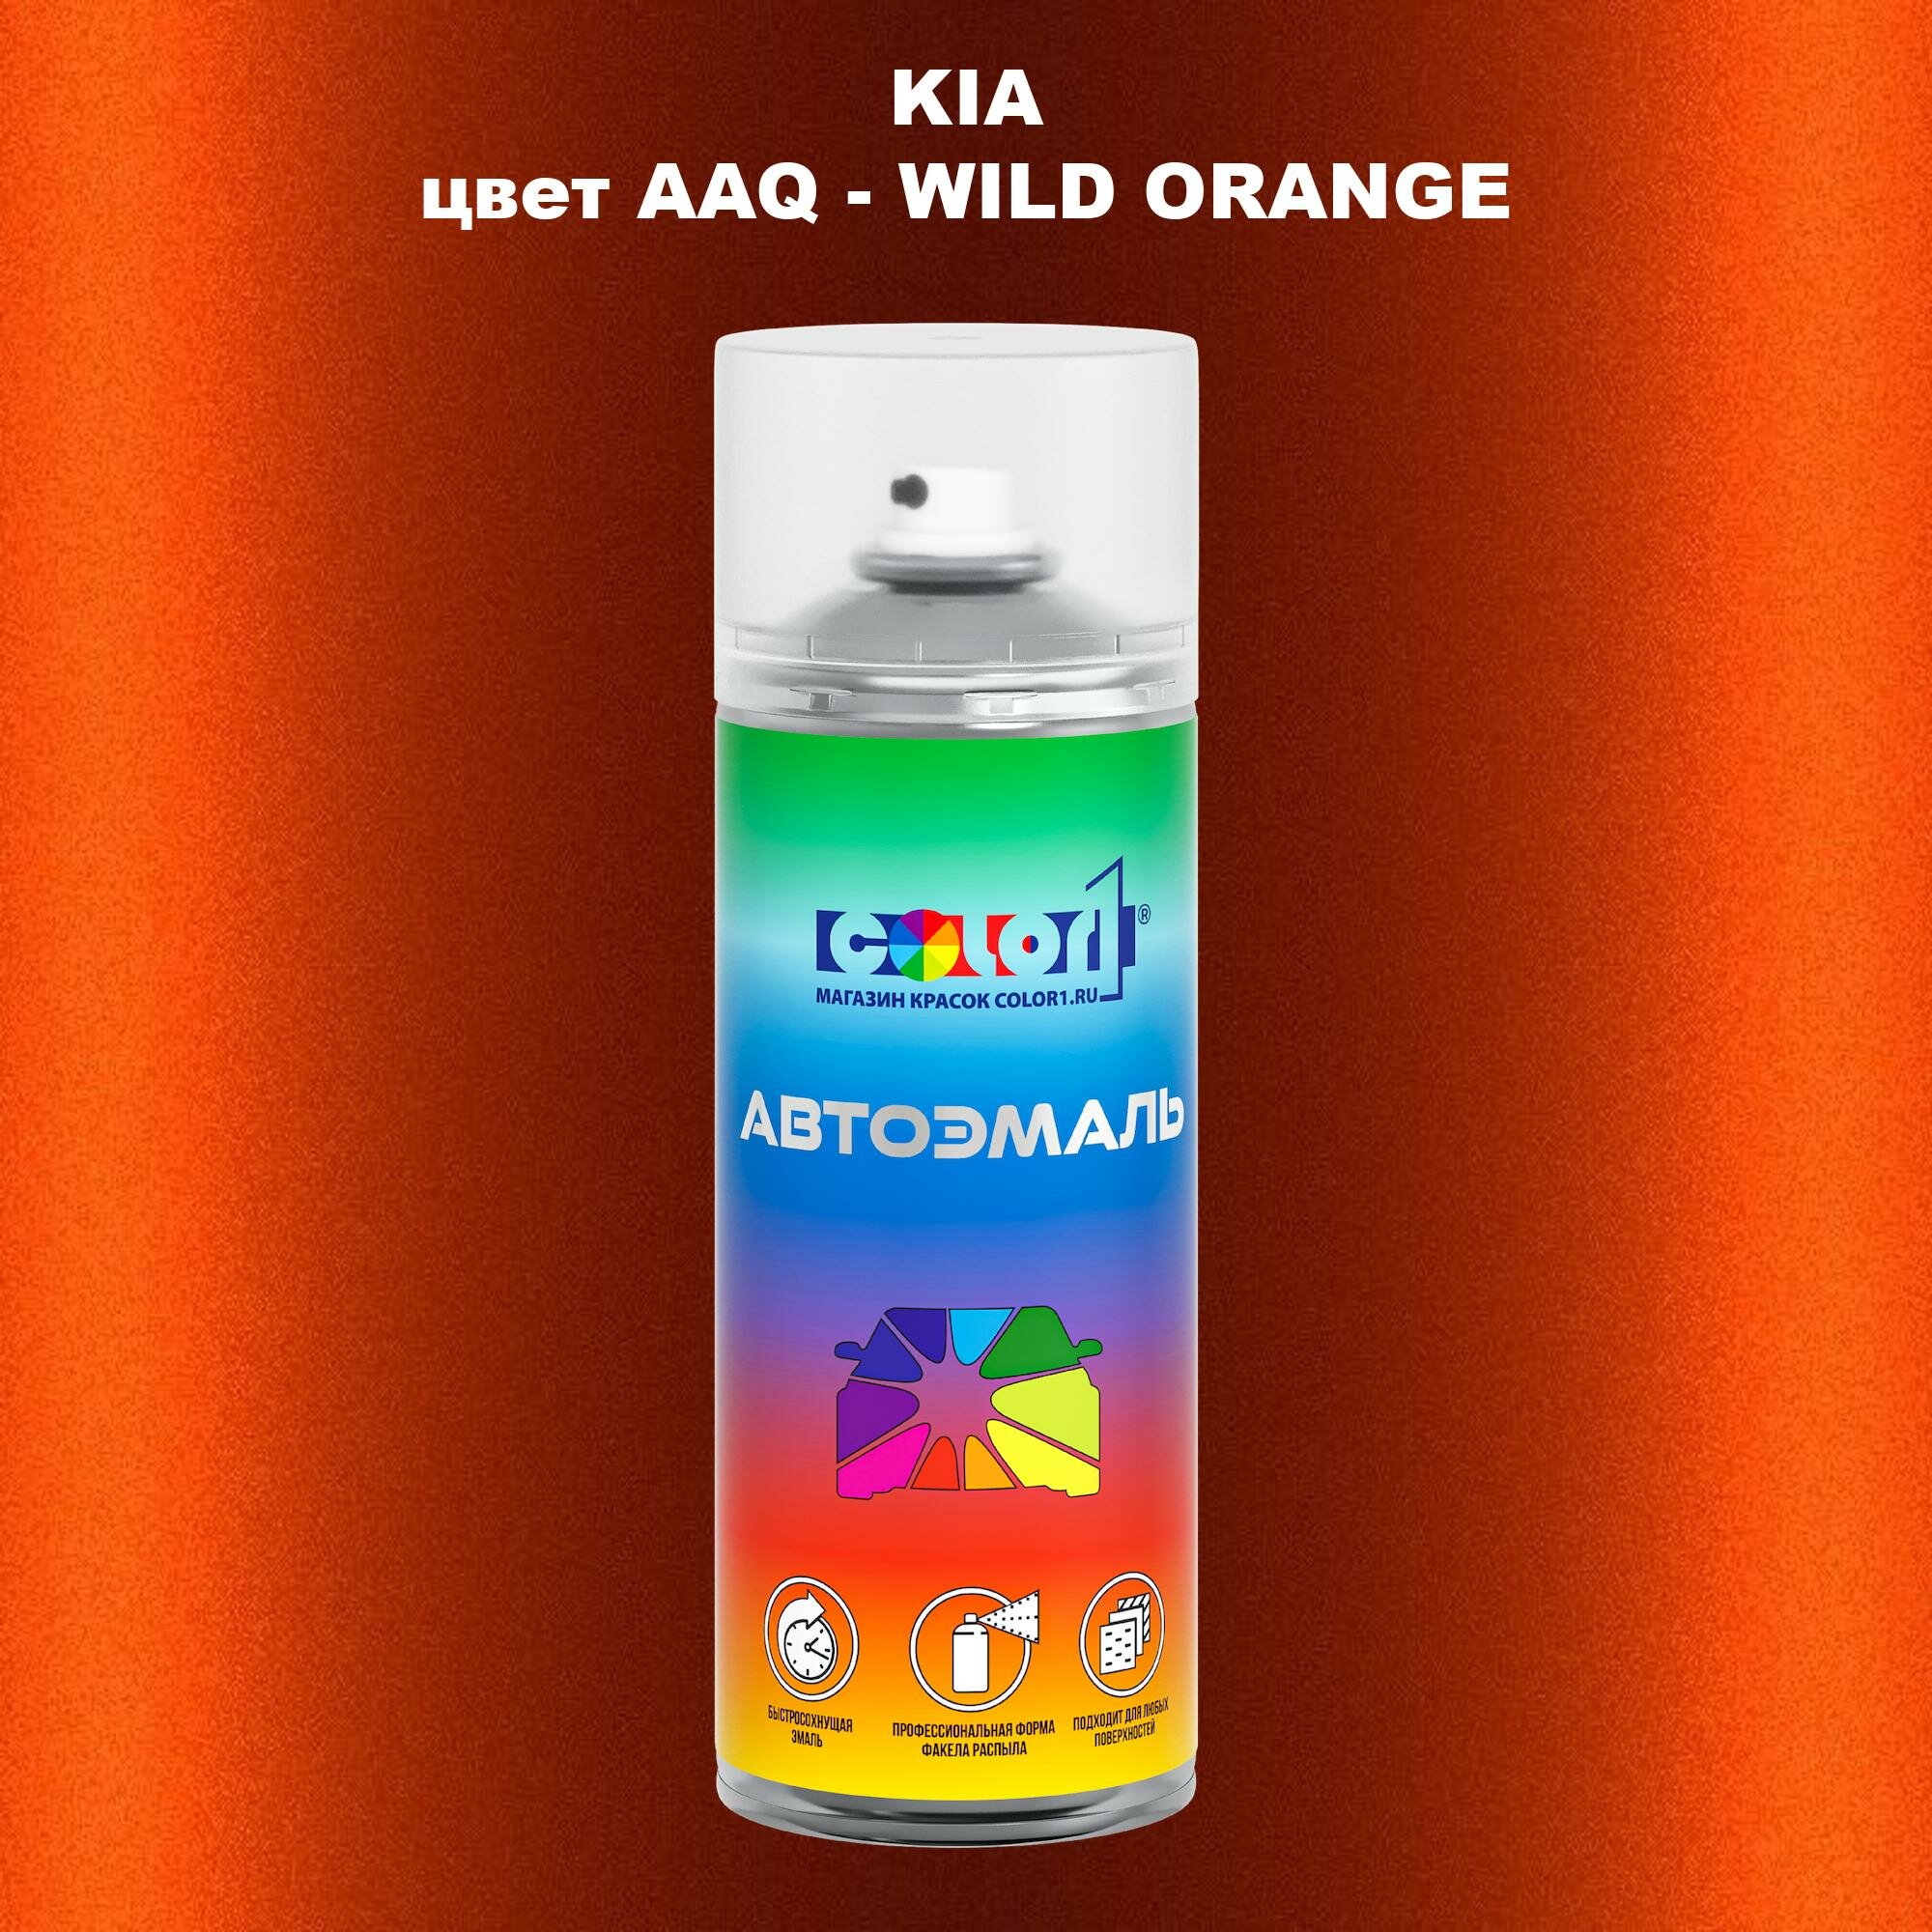 Аэрозольная краска COLOR1 для KIA цвет AAQ - WILD ORANGE